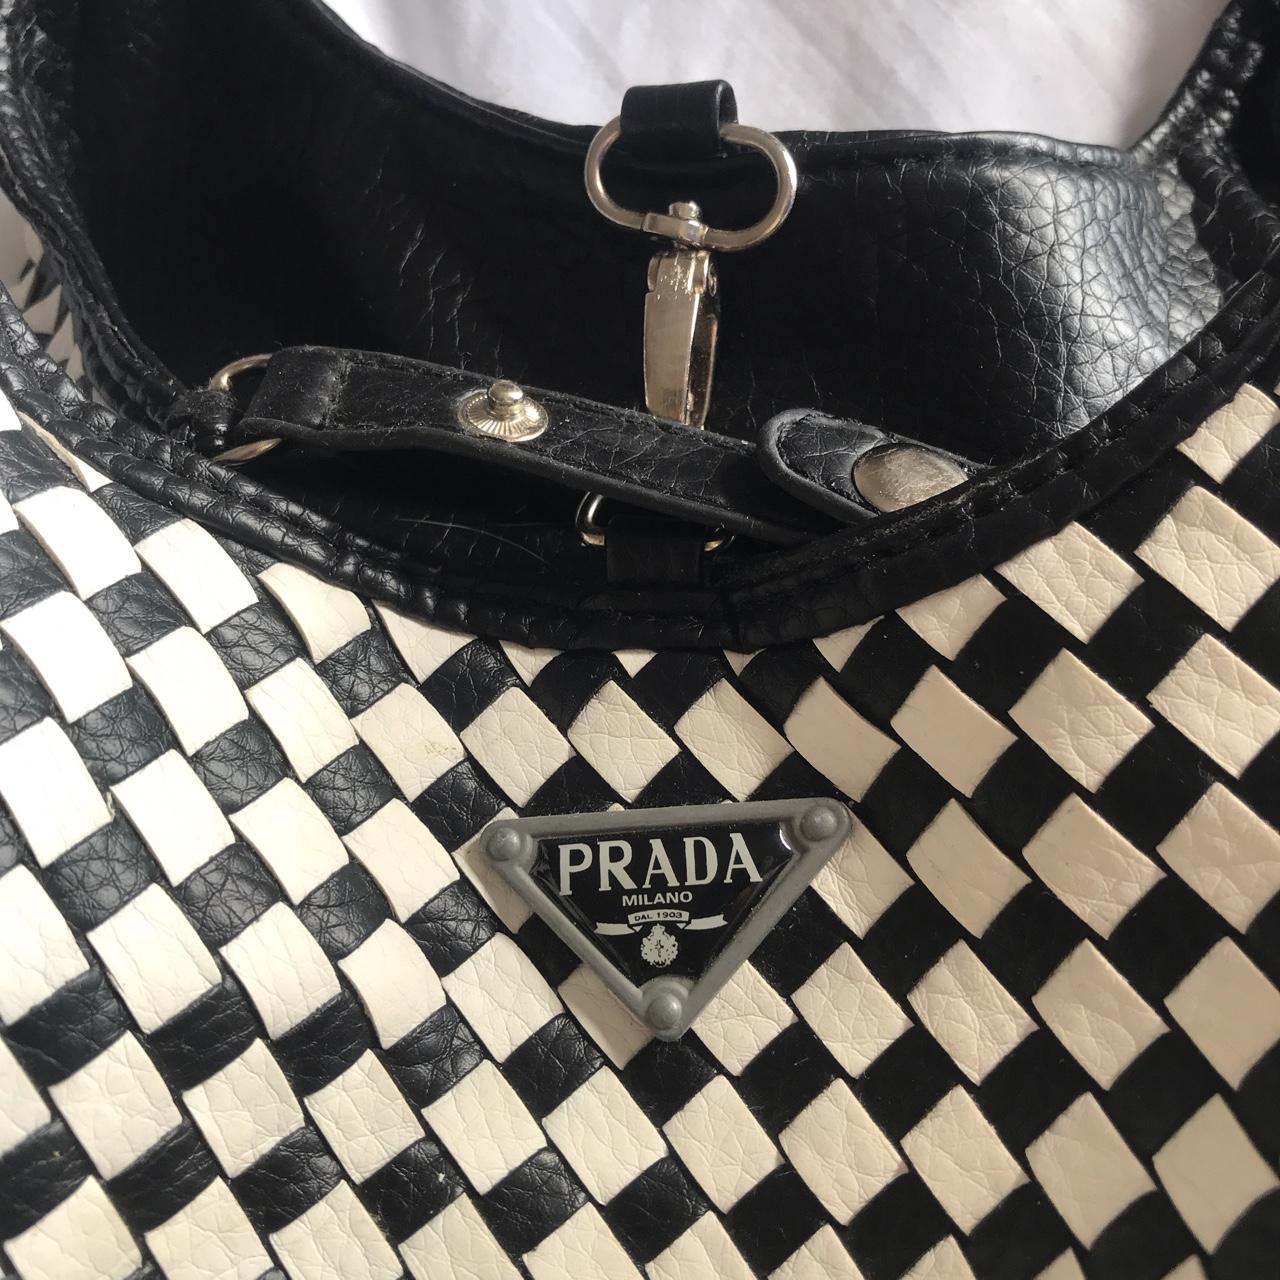 PRADA BAG , black and white chequered, mini black